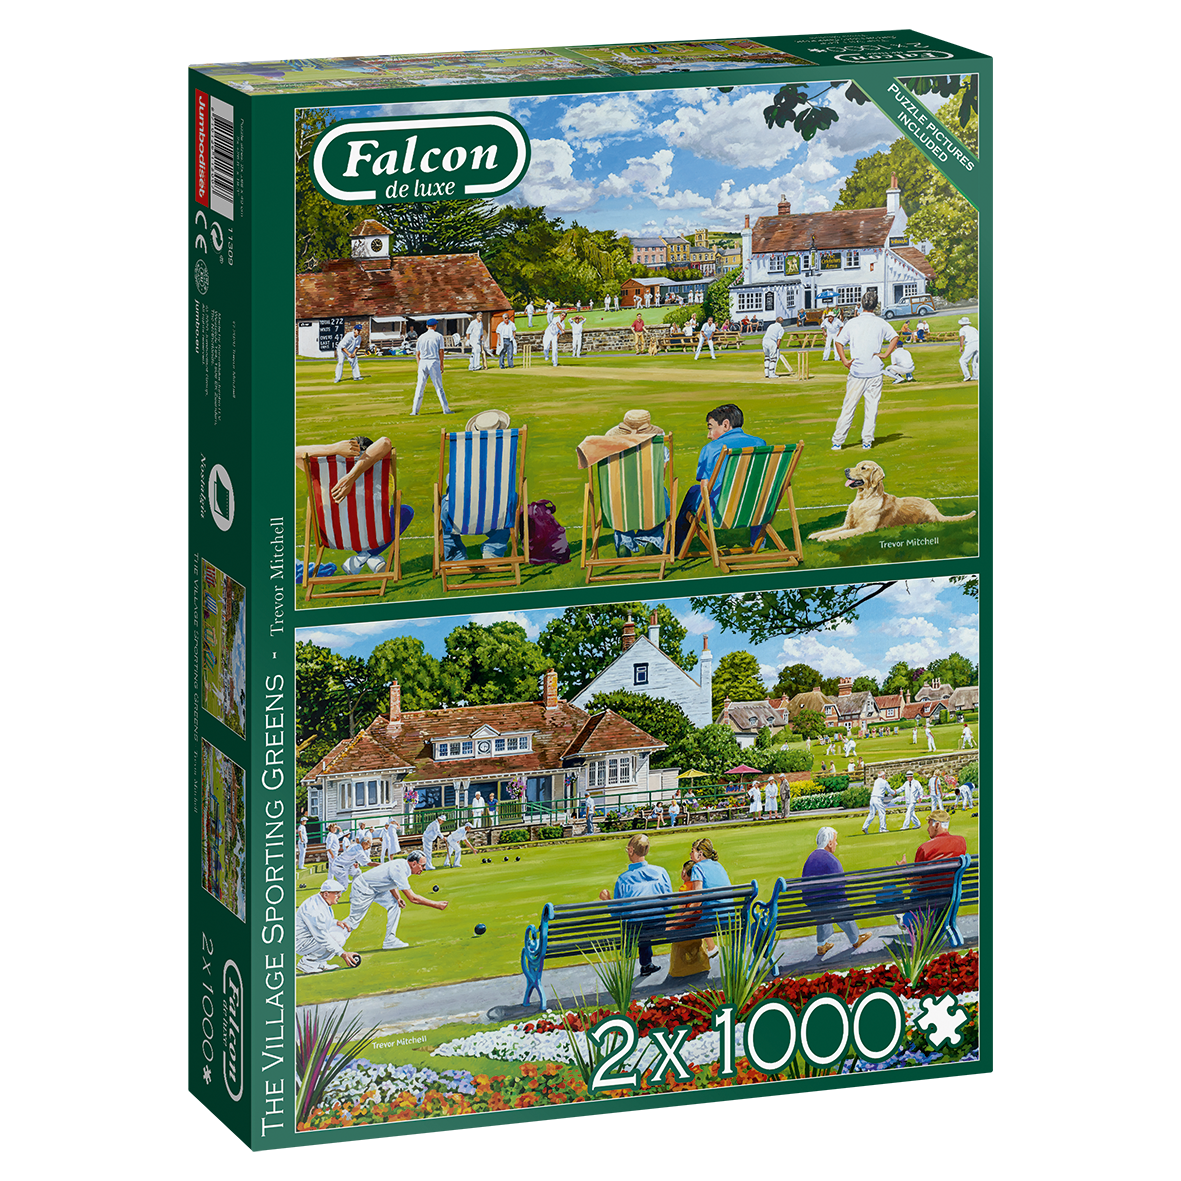 Falcon de luxe - The Village Sporting Greens - 2 x 1000 Piece Jigsaw Puzzle